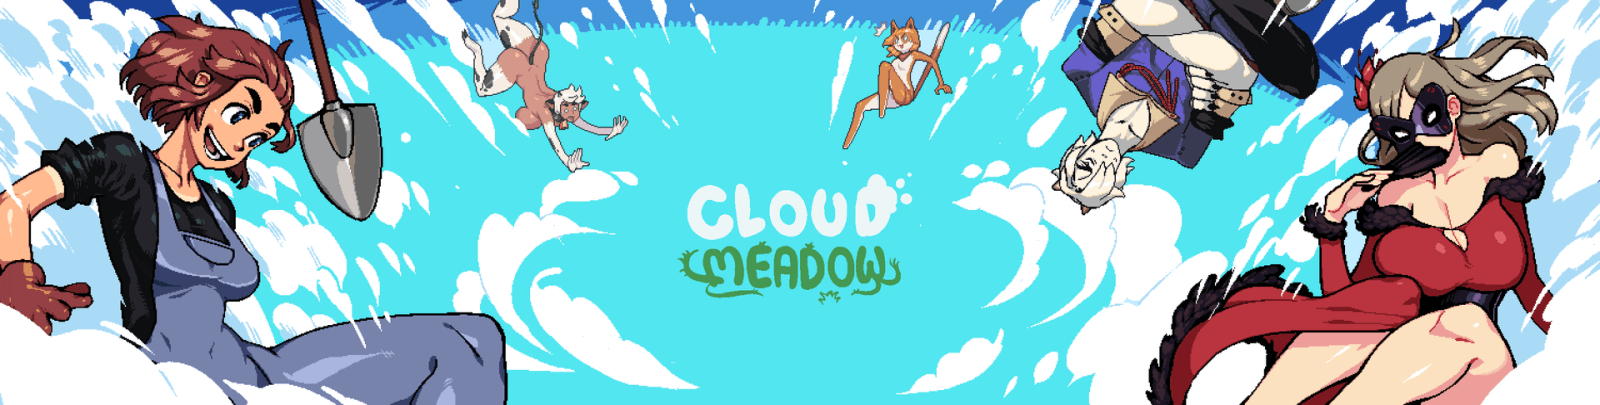 Cloud Meadow Downloads